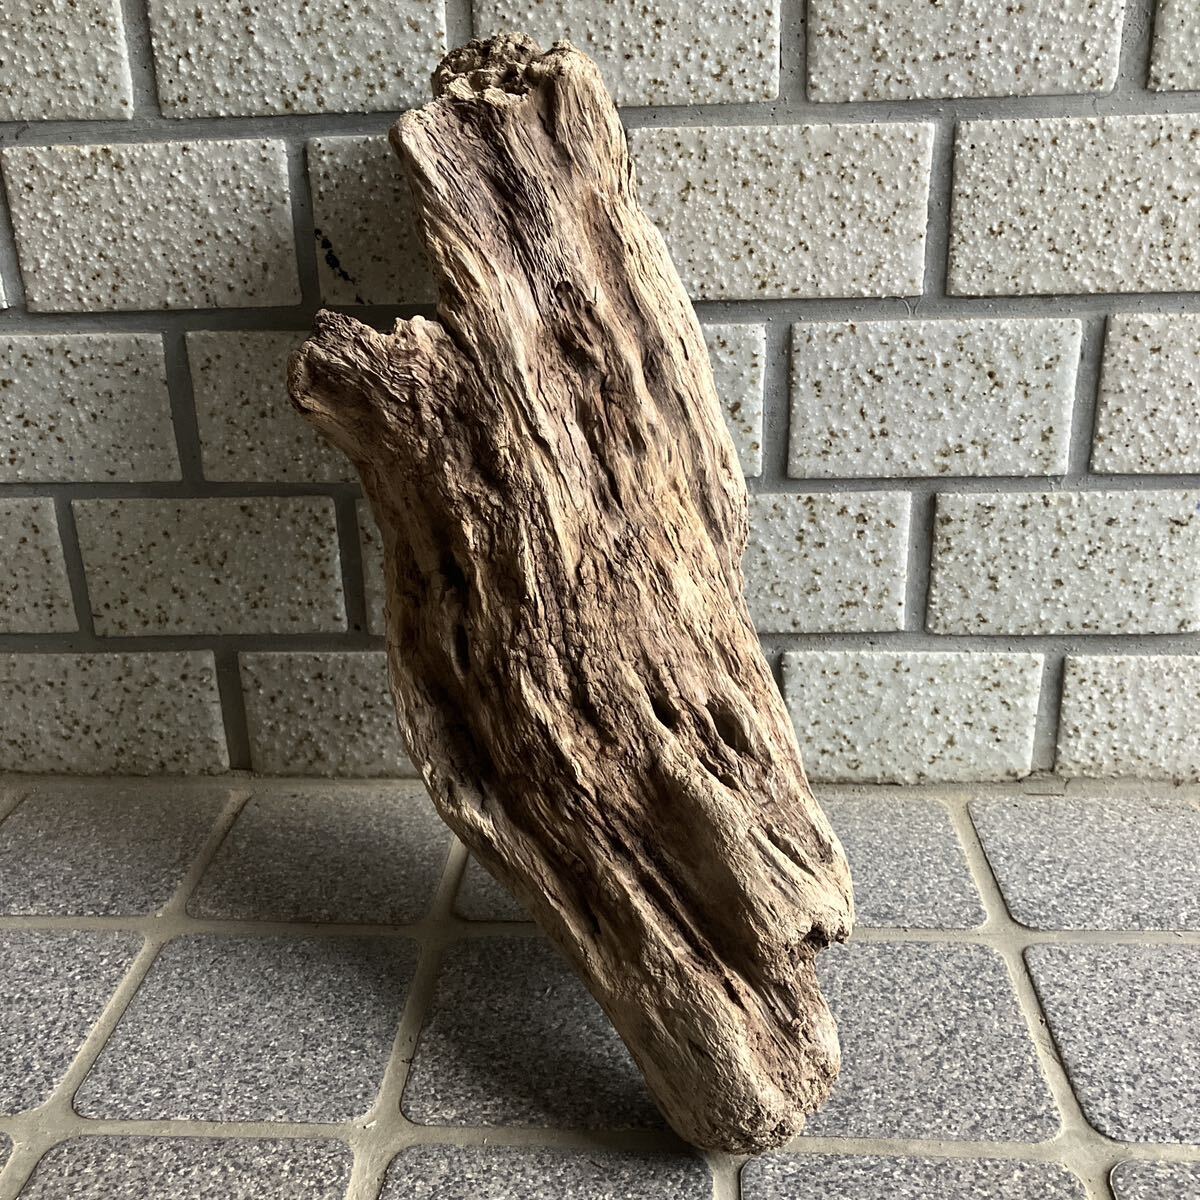  Japan sea. driftwood {.16}36.×15×12.* search *e. plant * terrarium * put on raw plant * moss lium* succulent plant * breeding for material * aquarium 